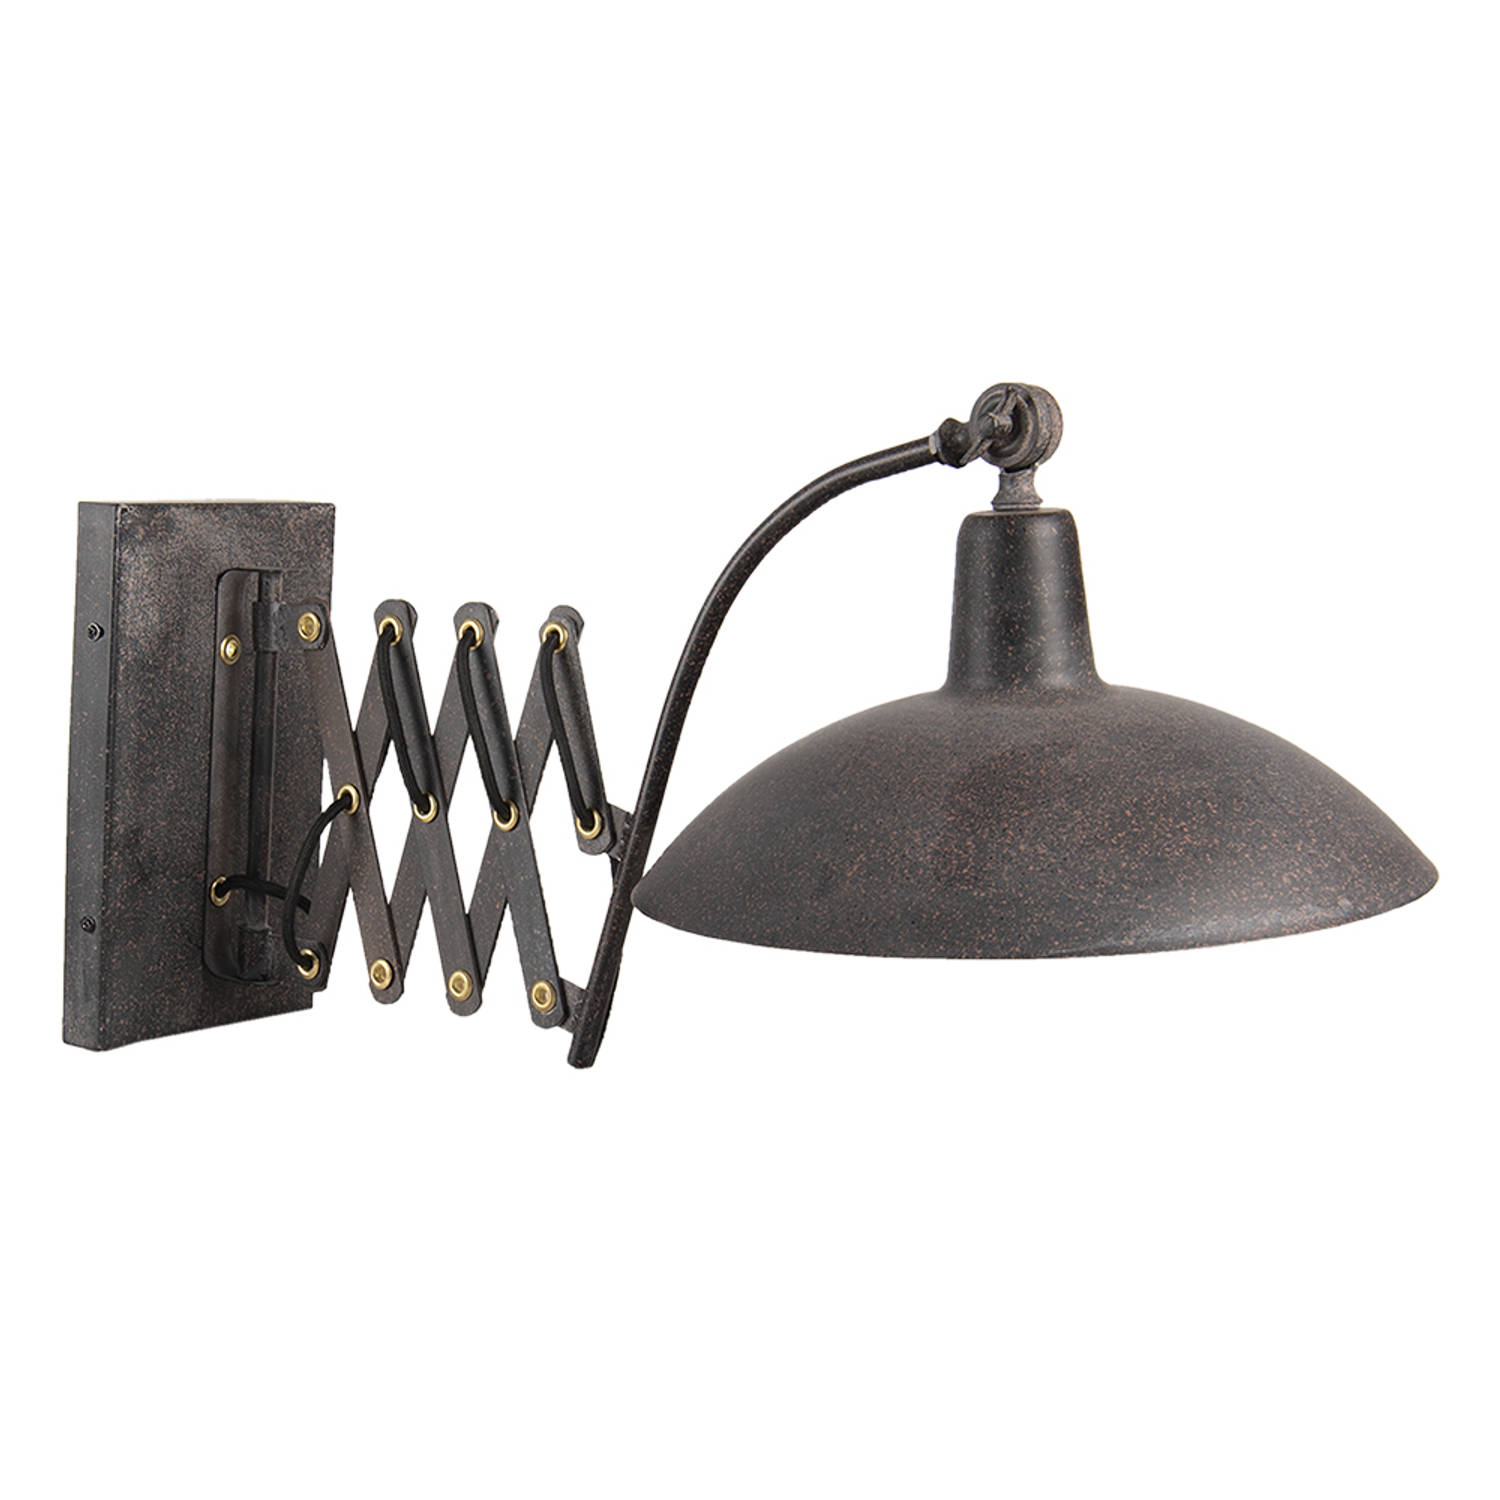 HAES DECO Wandlamp Industrial Vintage-Retro Lamp, 55x33x34 cm Zwart Metaal Muurlamp, Sfeerlamp